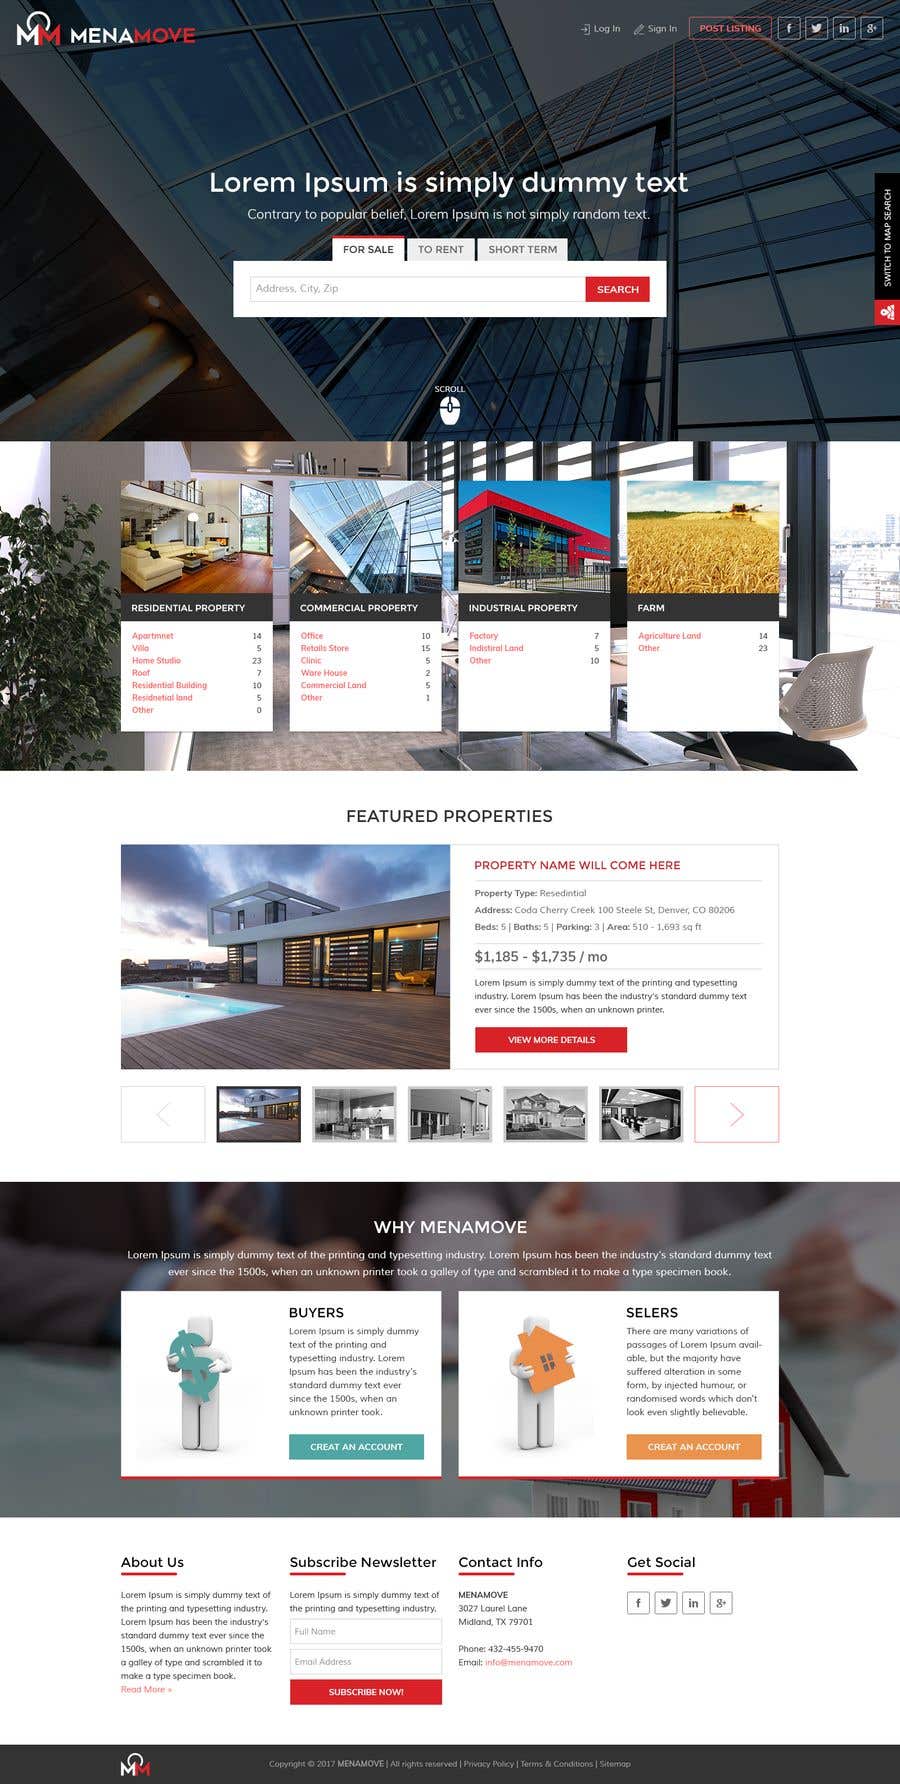 Wasilisho la Shindano #9 la                                                 Design a homepage Mockup (Only photoshop or similar) without front end coding. Just nice/modern graphic design
                                            